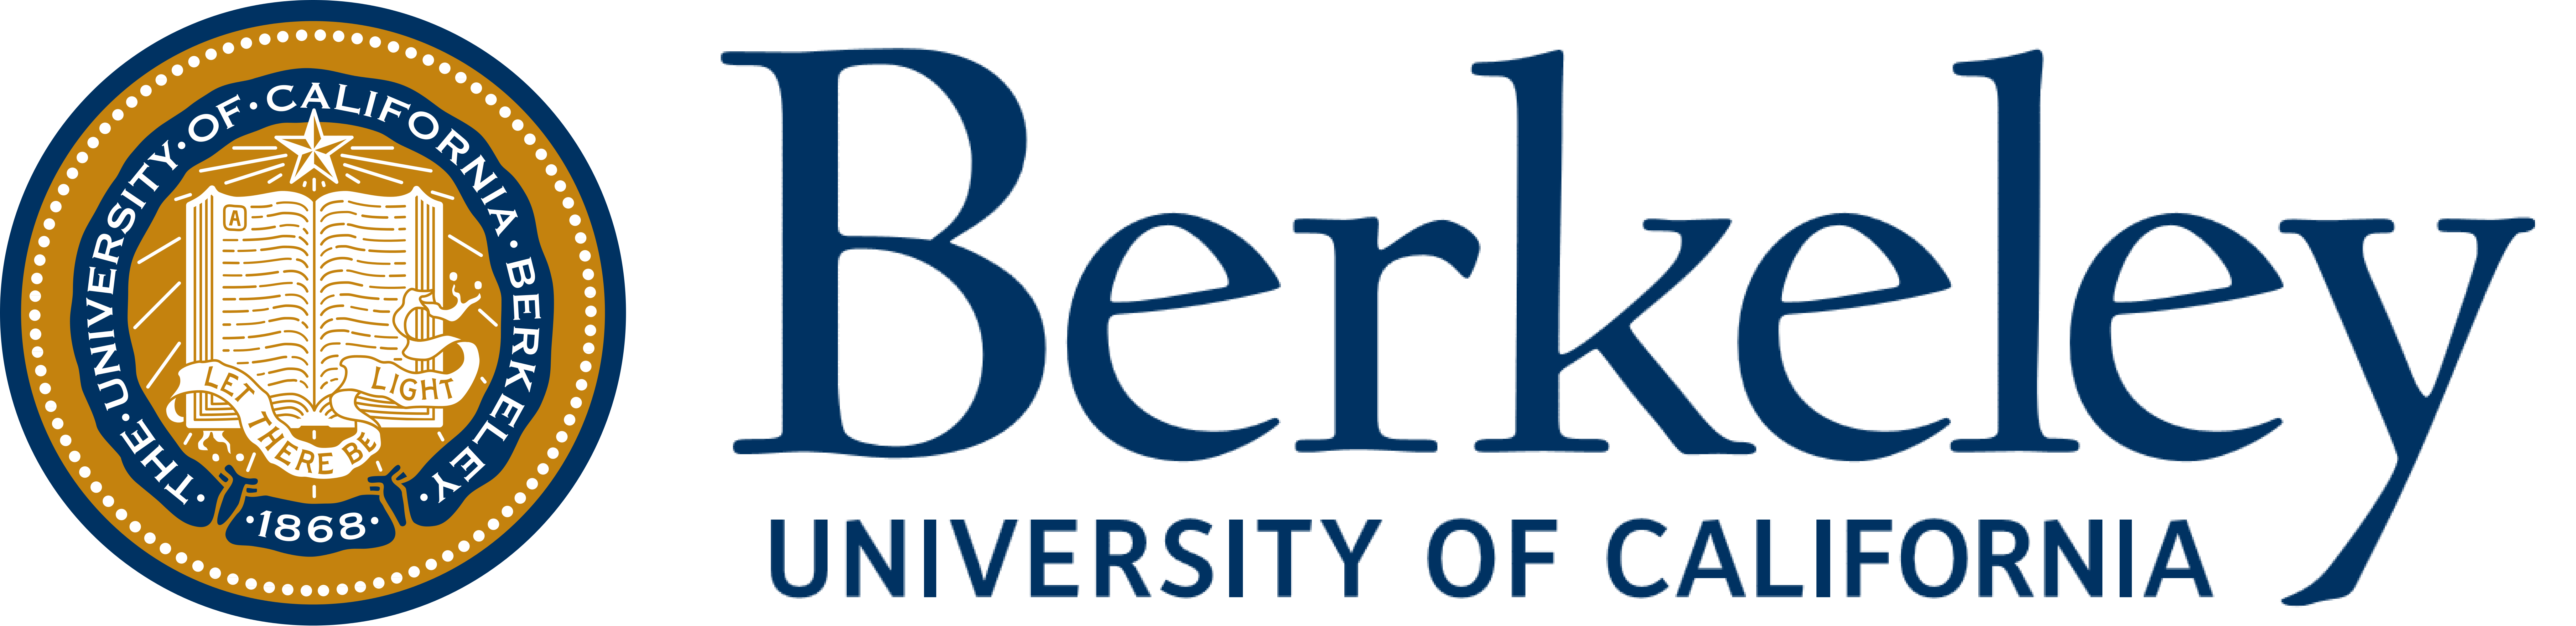 Berkeley Logo - berkeley logo